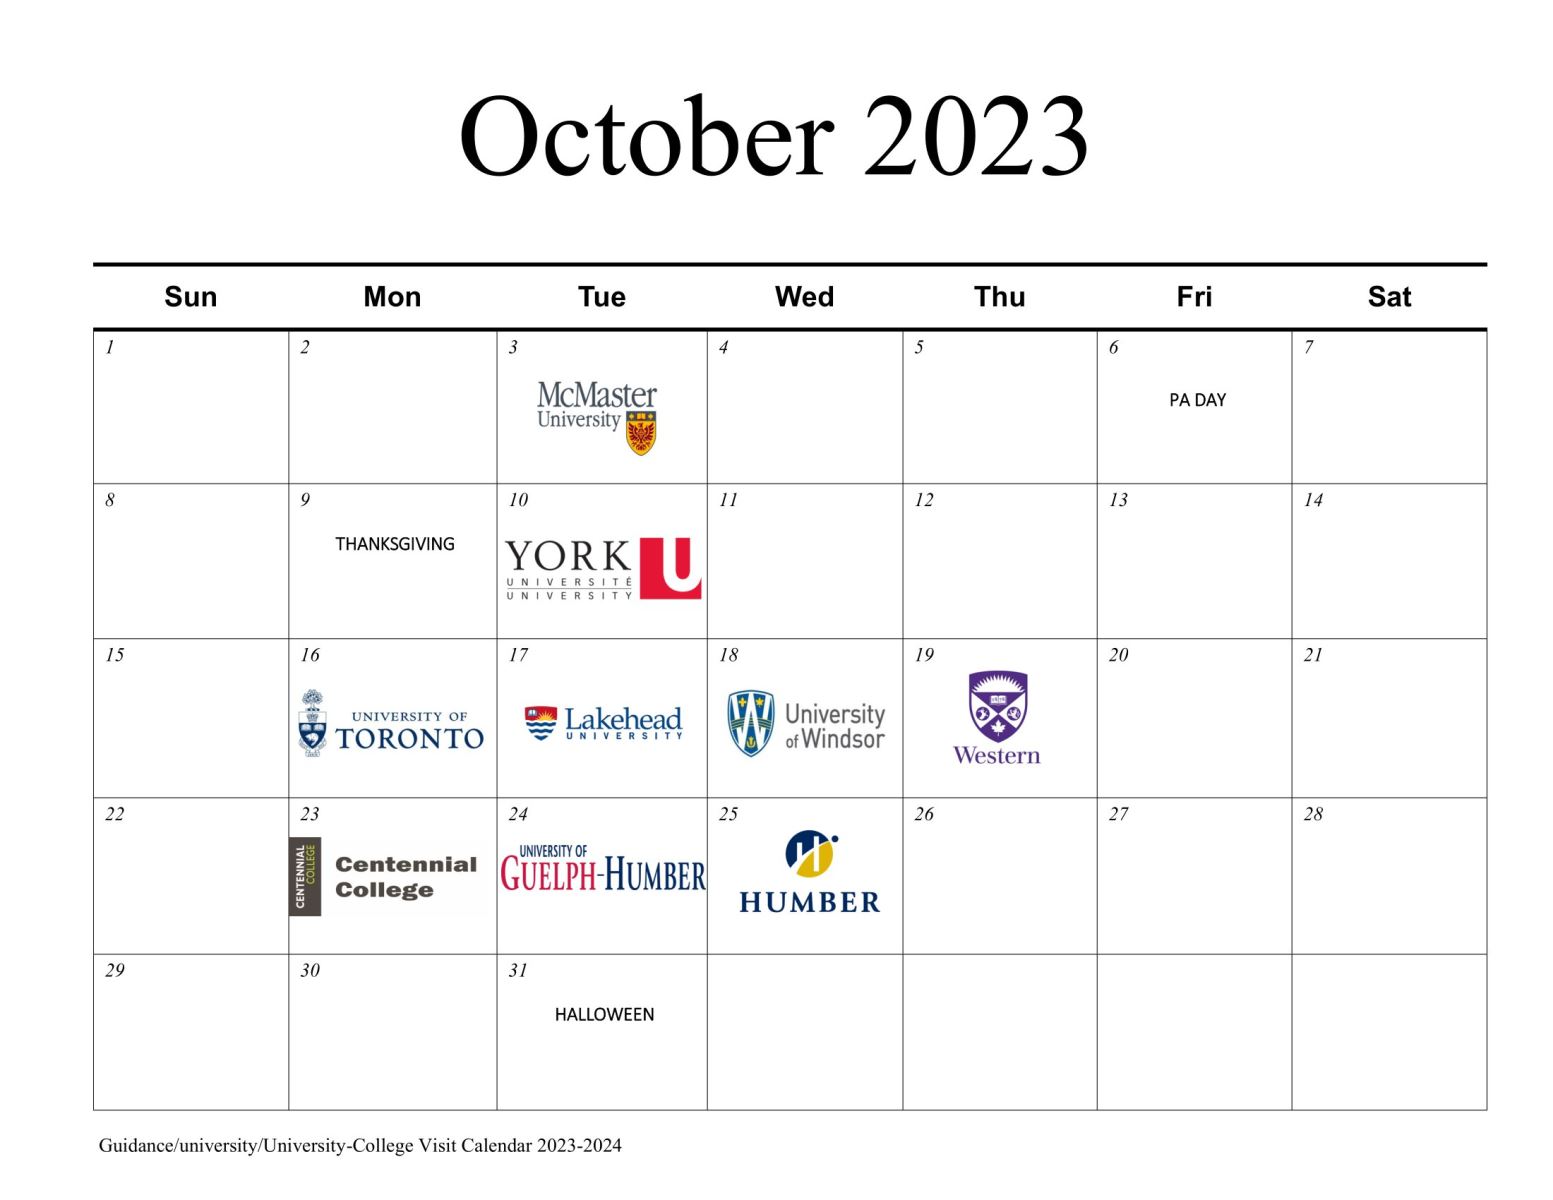 October university virtual information sessions